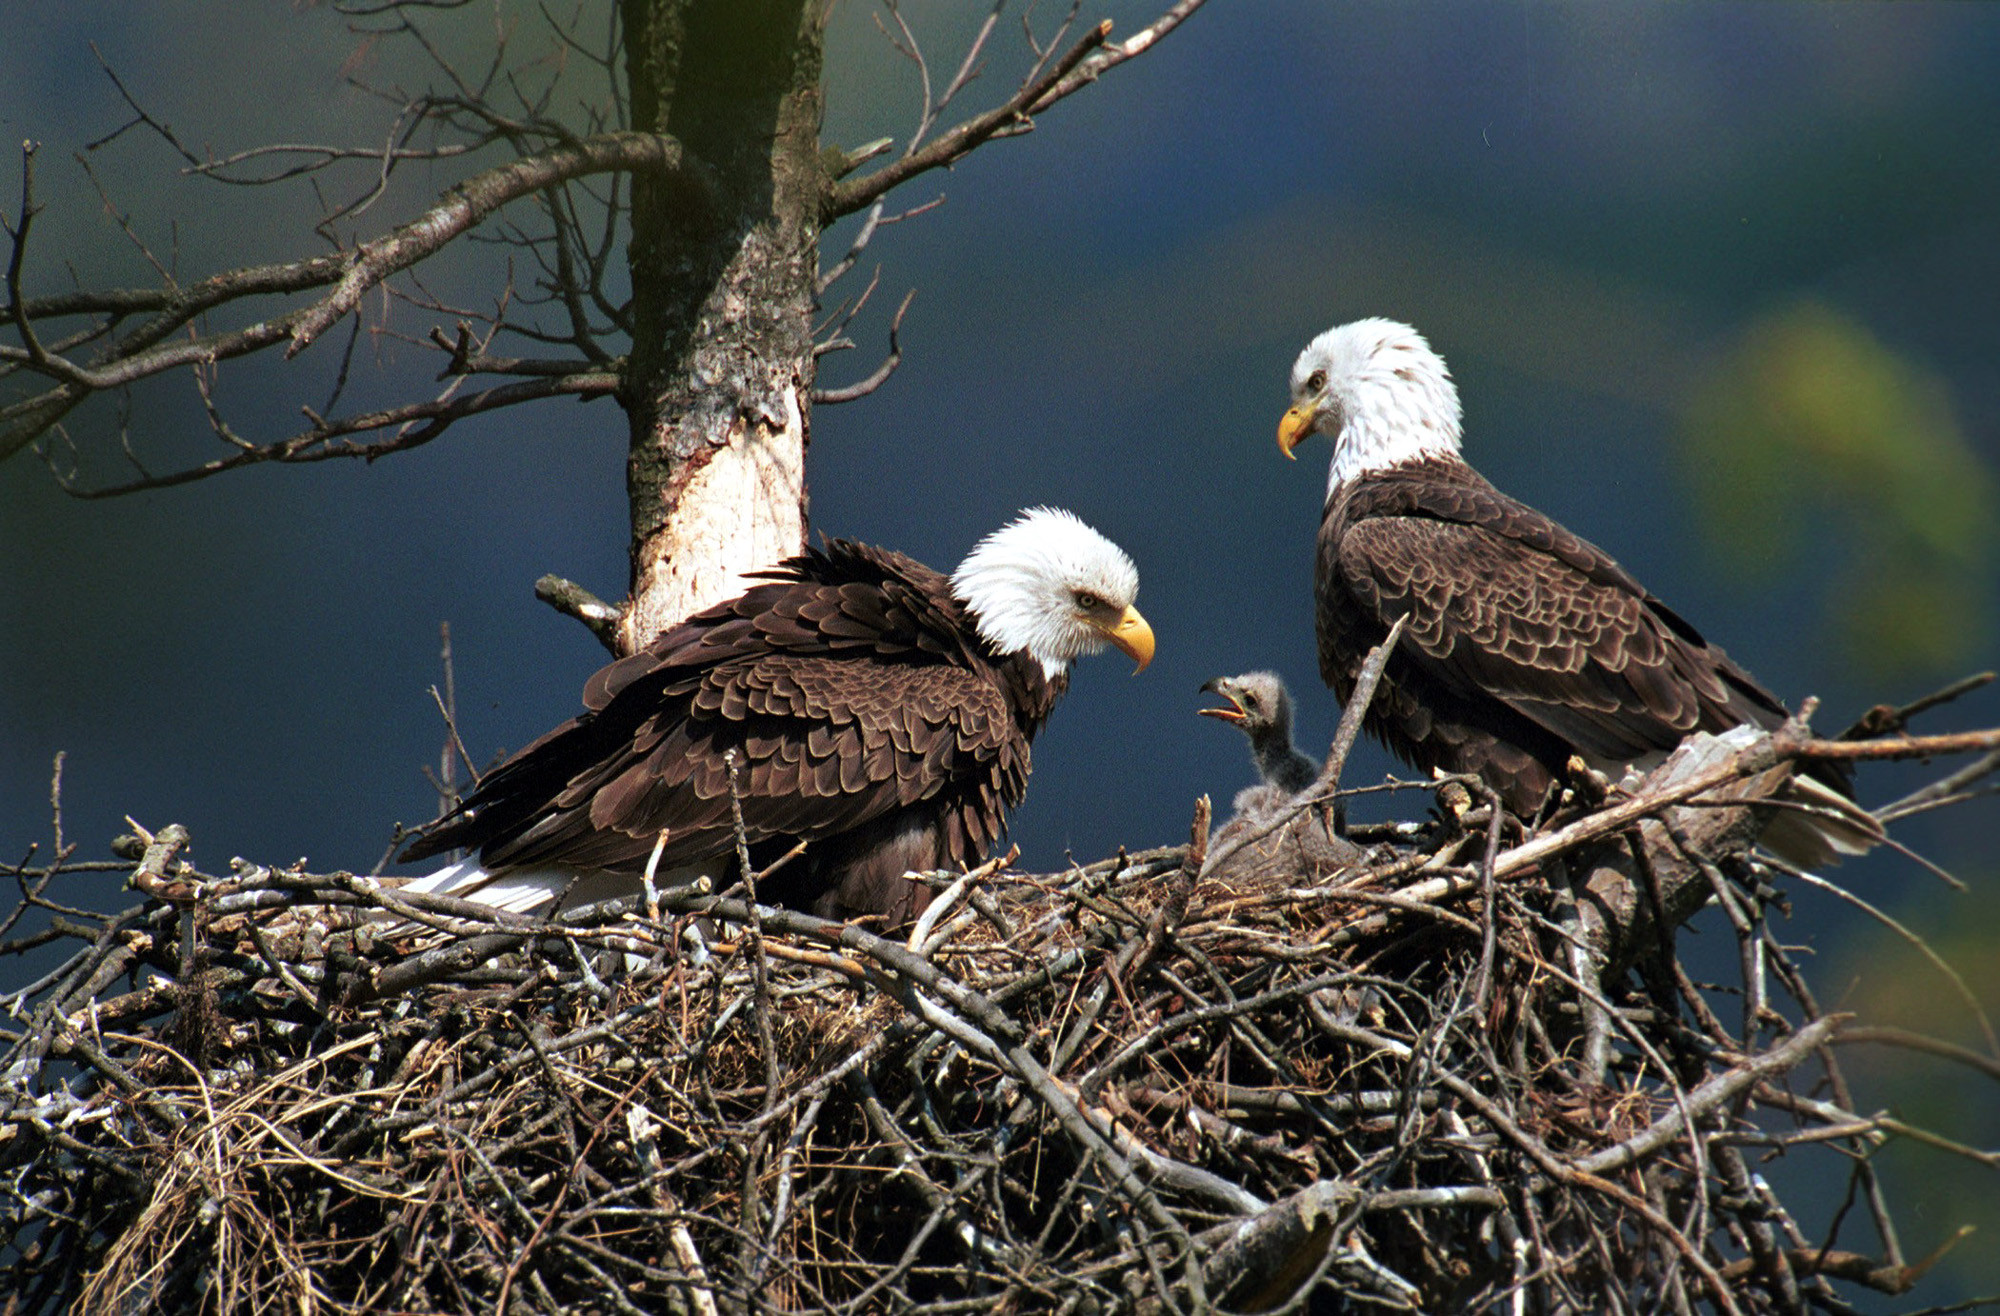 Resultado de imagem para the eaglets were fighting over food